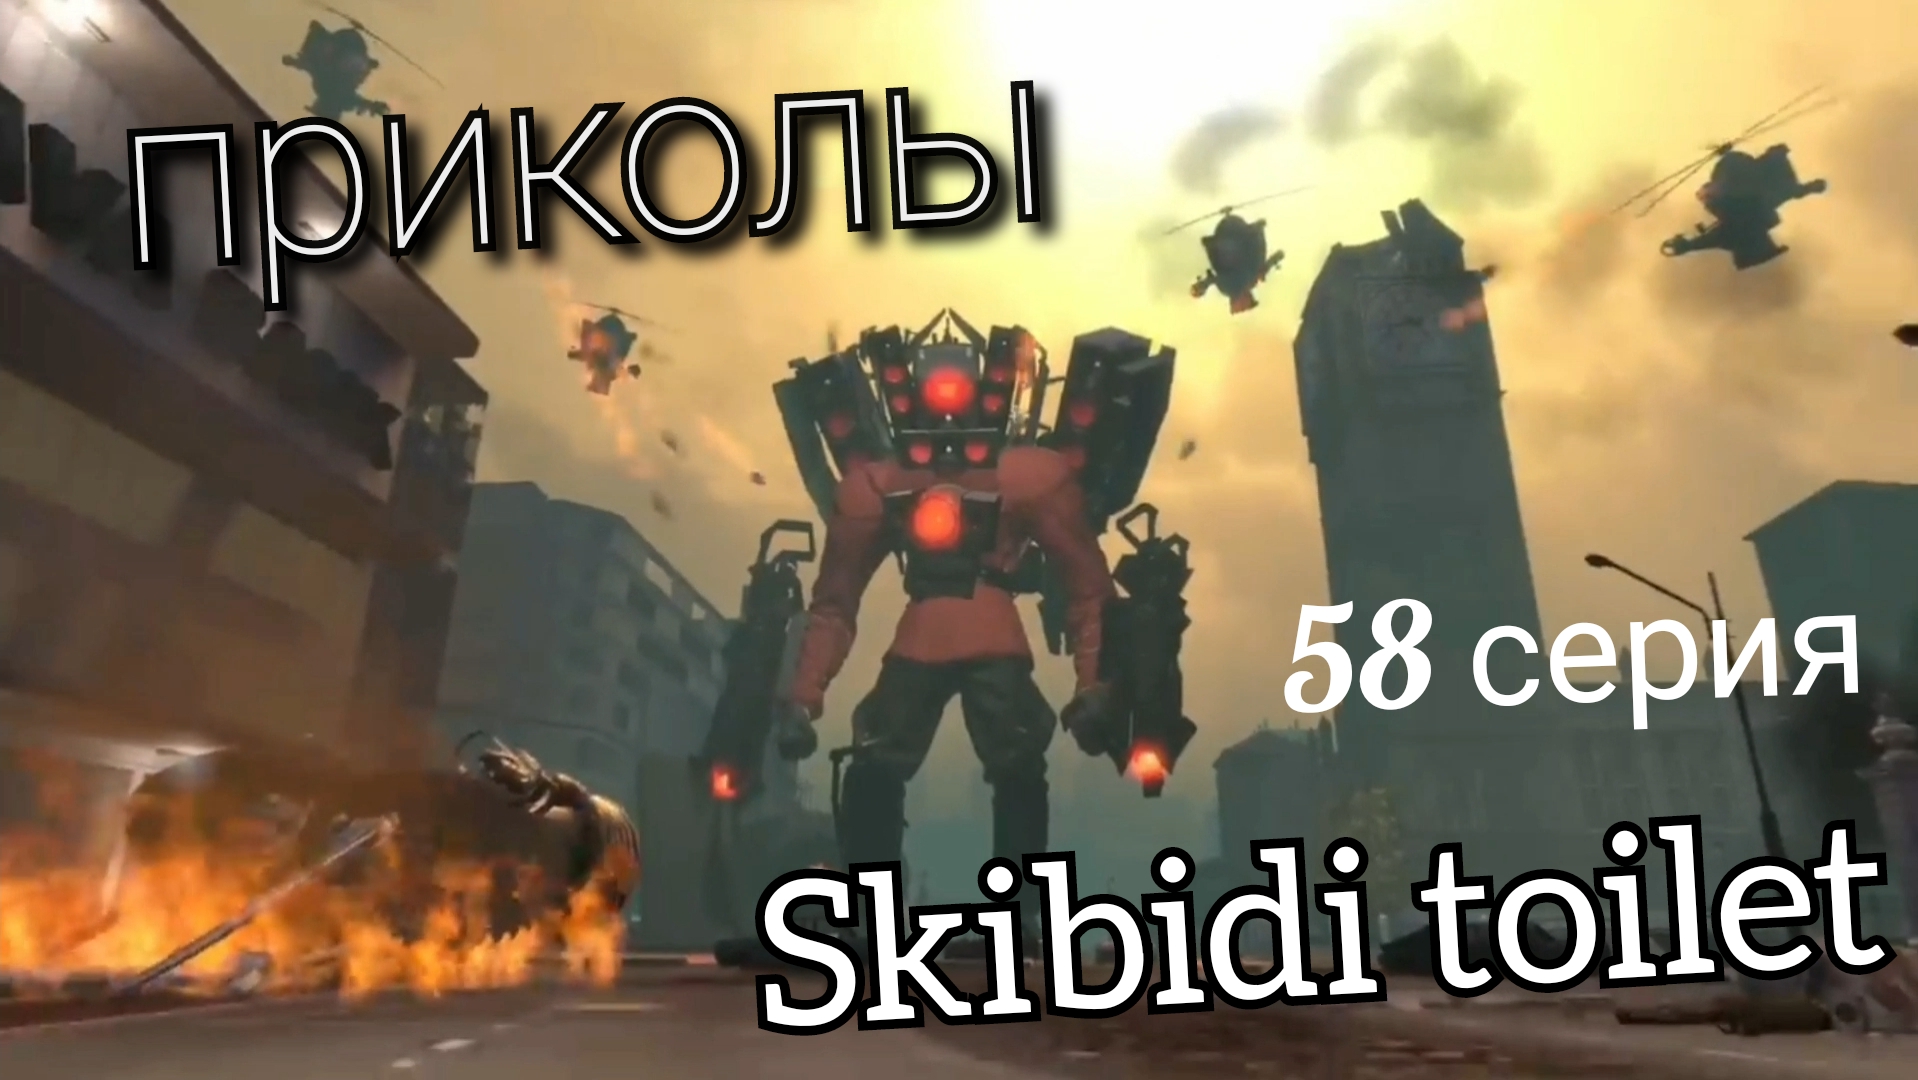 Skibidi toilet 58 #приколы